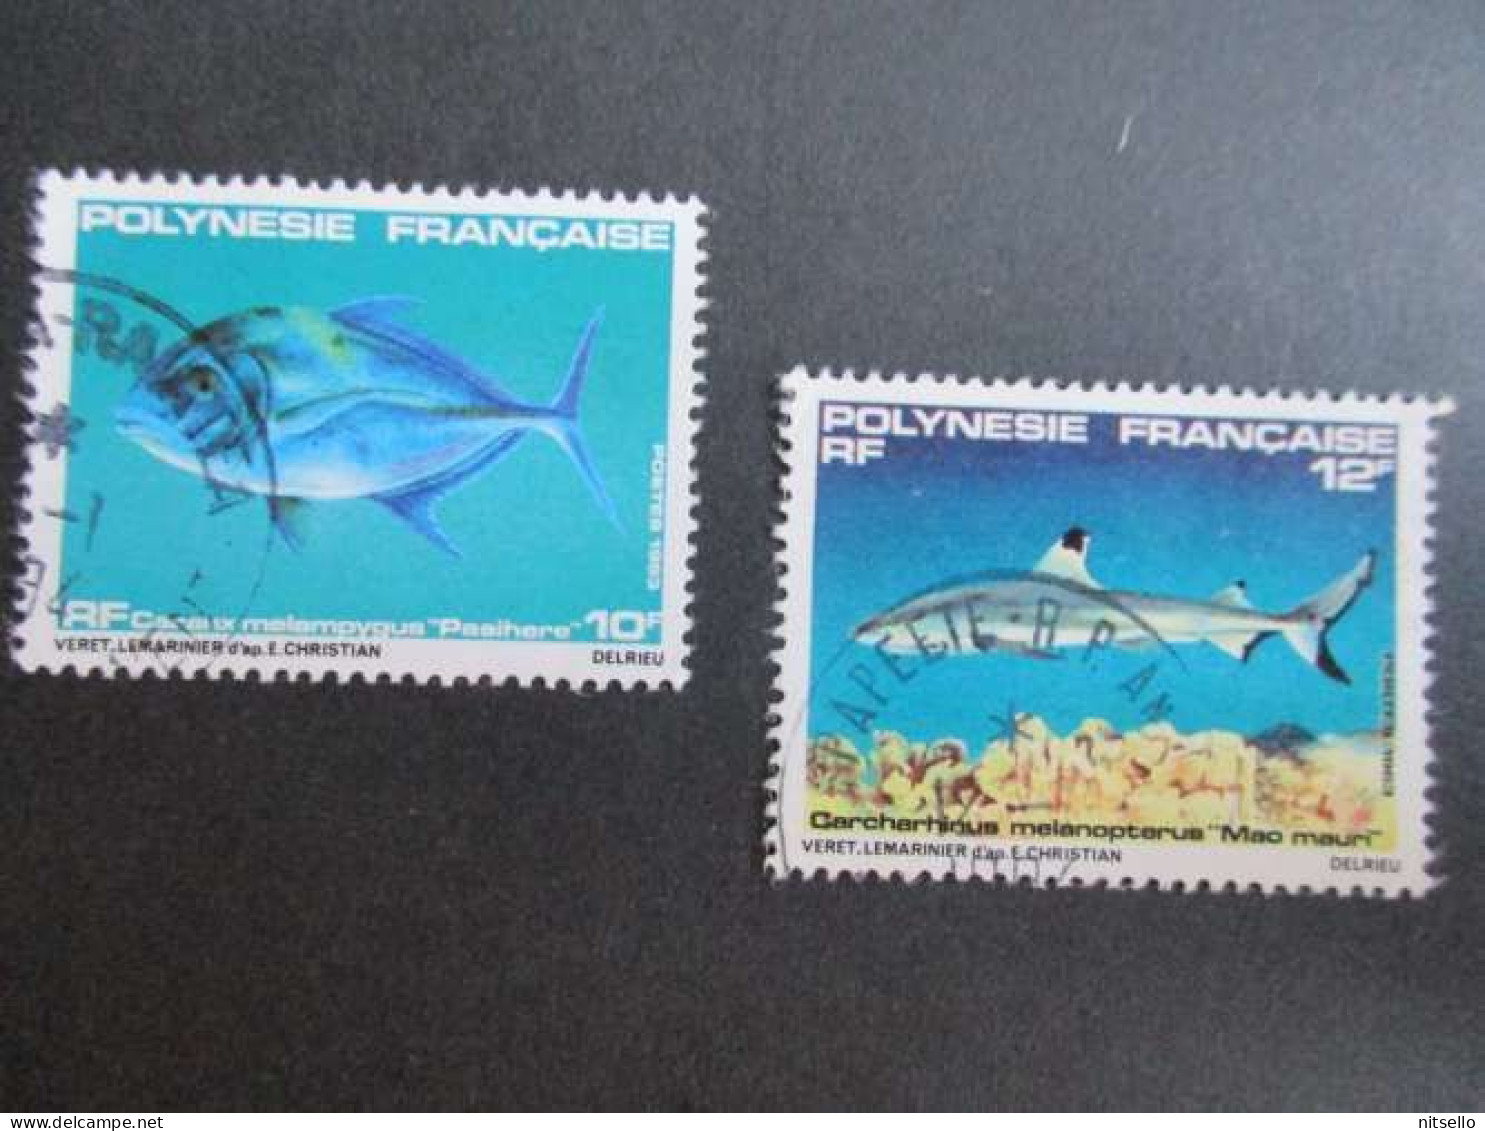 LOTE 2202A ///  (C025)  POLINESIA FRANCESA  - YVERT Nº:  193/194 1982 ¡¡¡ OFERTA - LIQUIDATION - JE LIQUIDE !!! - Used Stamps